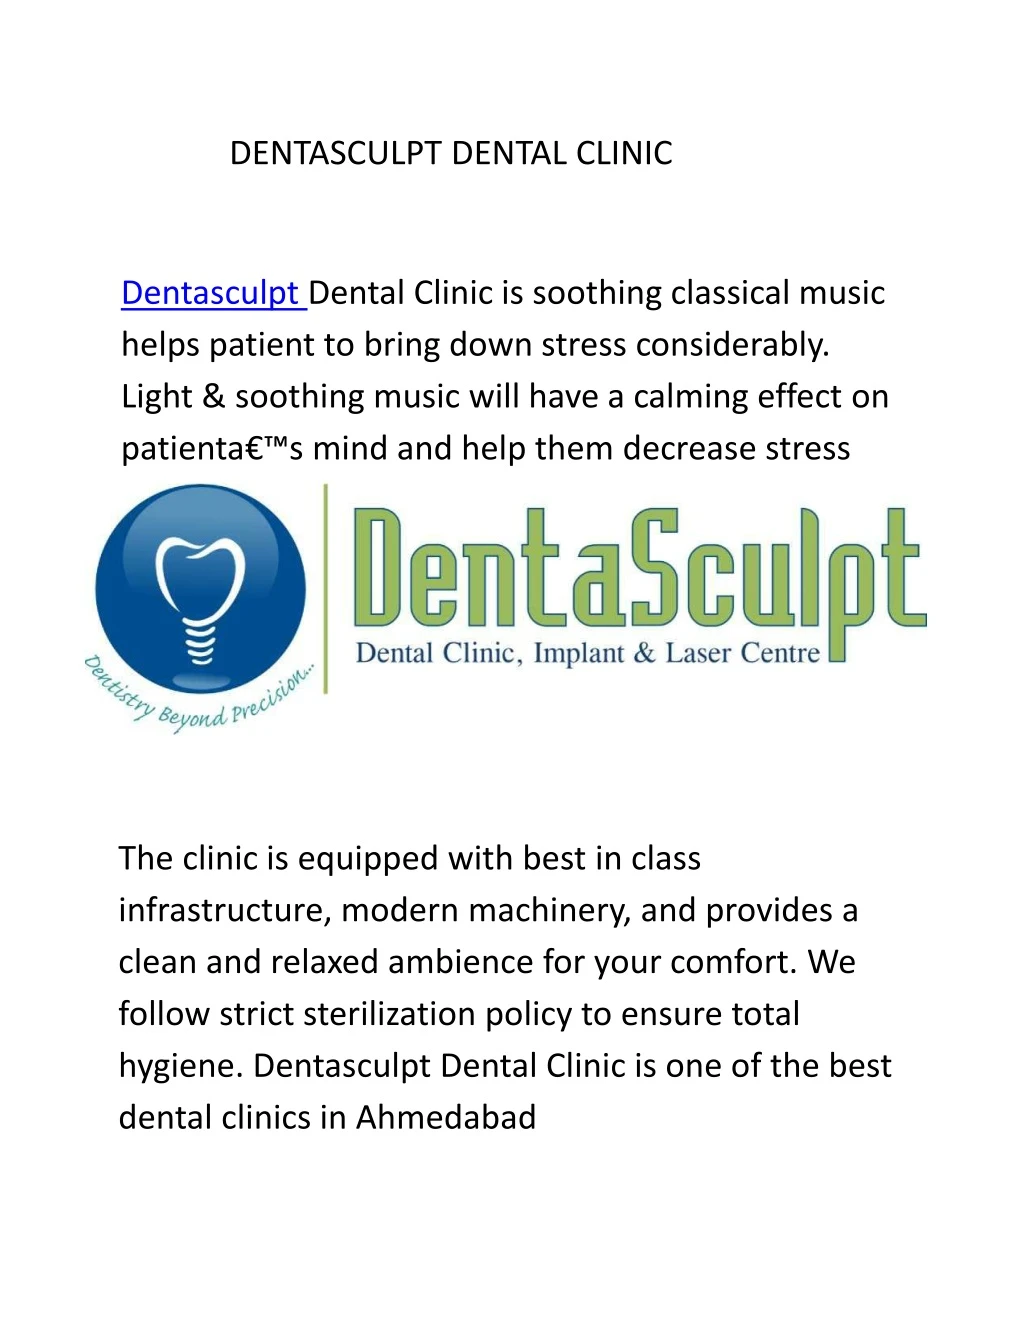 dentasculpt dental clinic